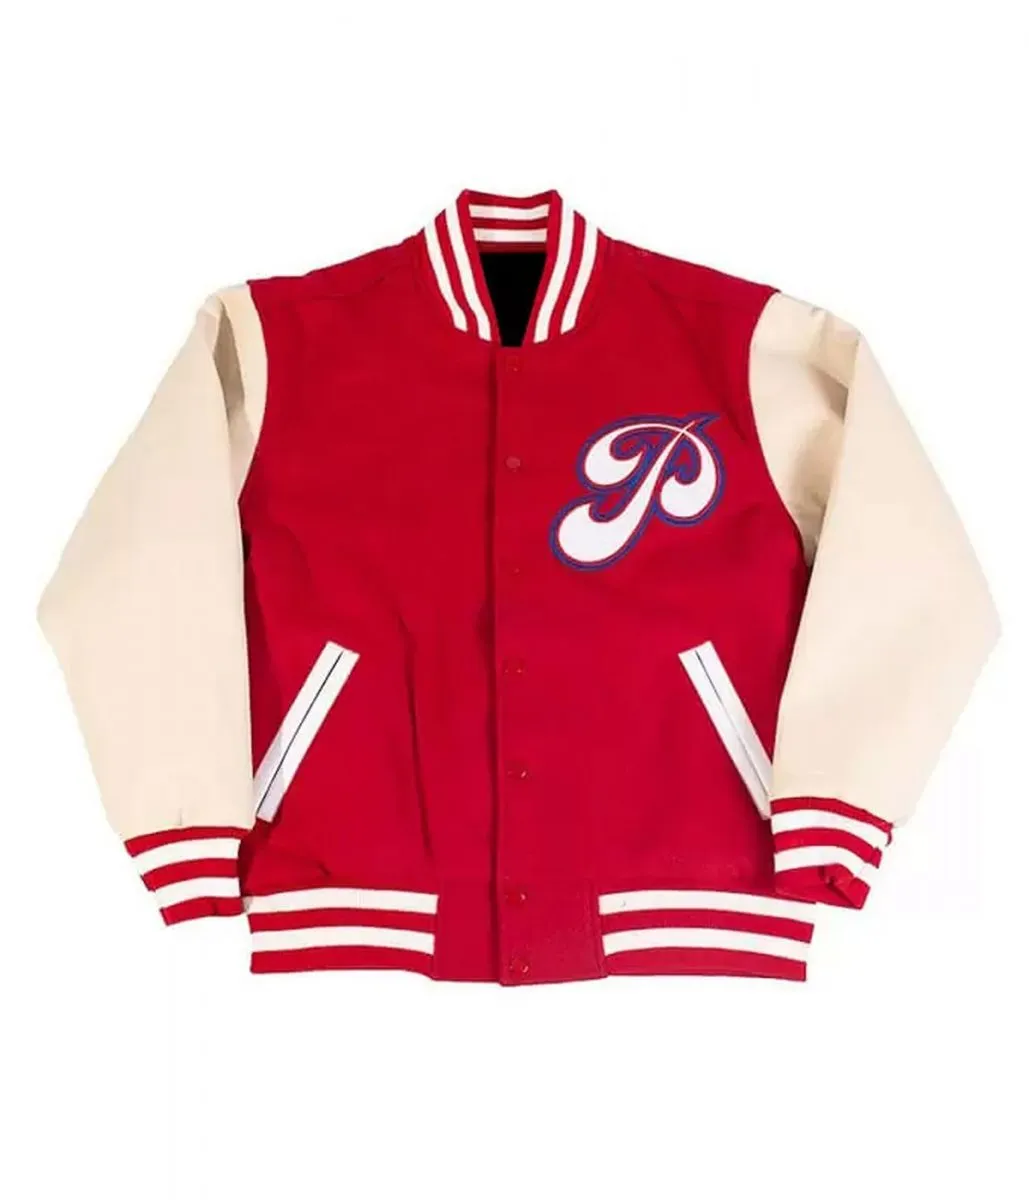 Baseball Philadelphia Stars 1934 Red Varsity Jacket